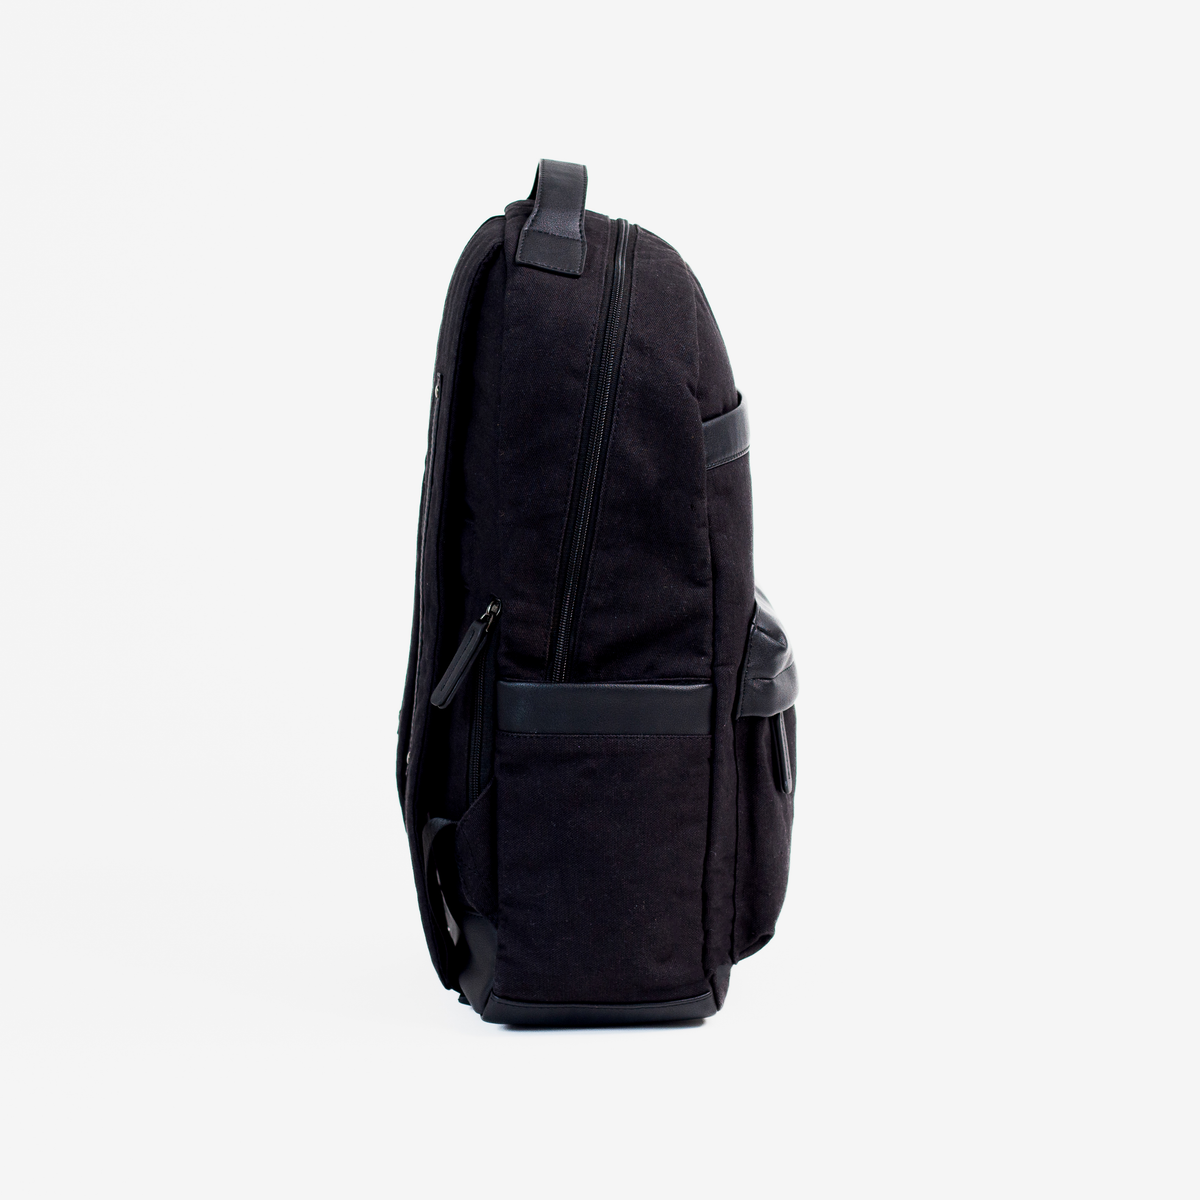 Personalised Rover Backpack - Black